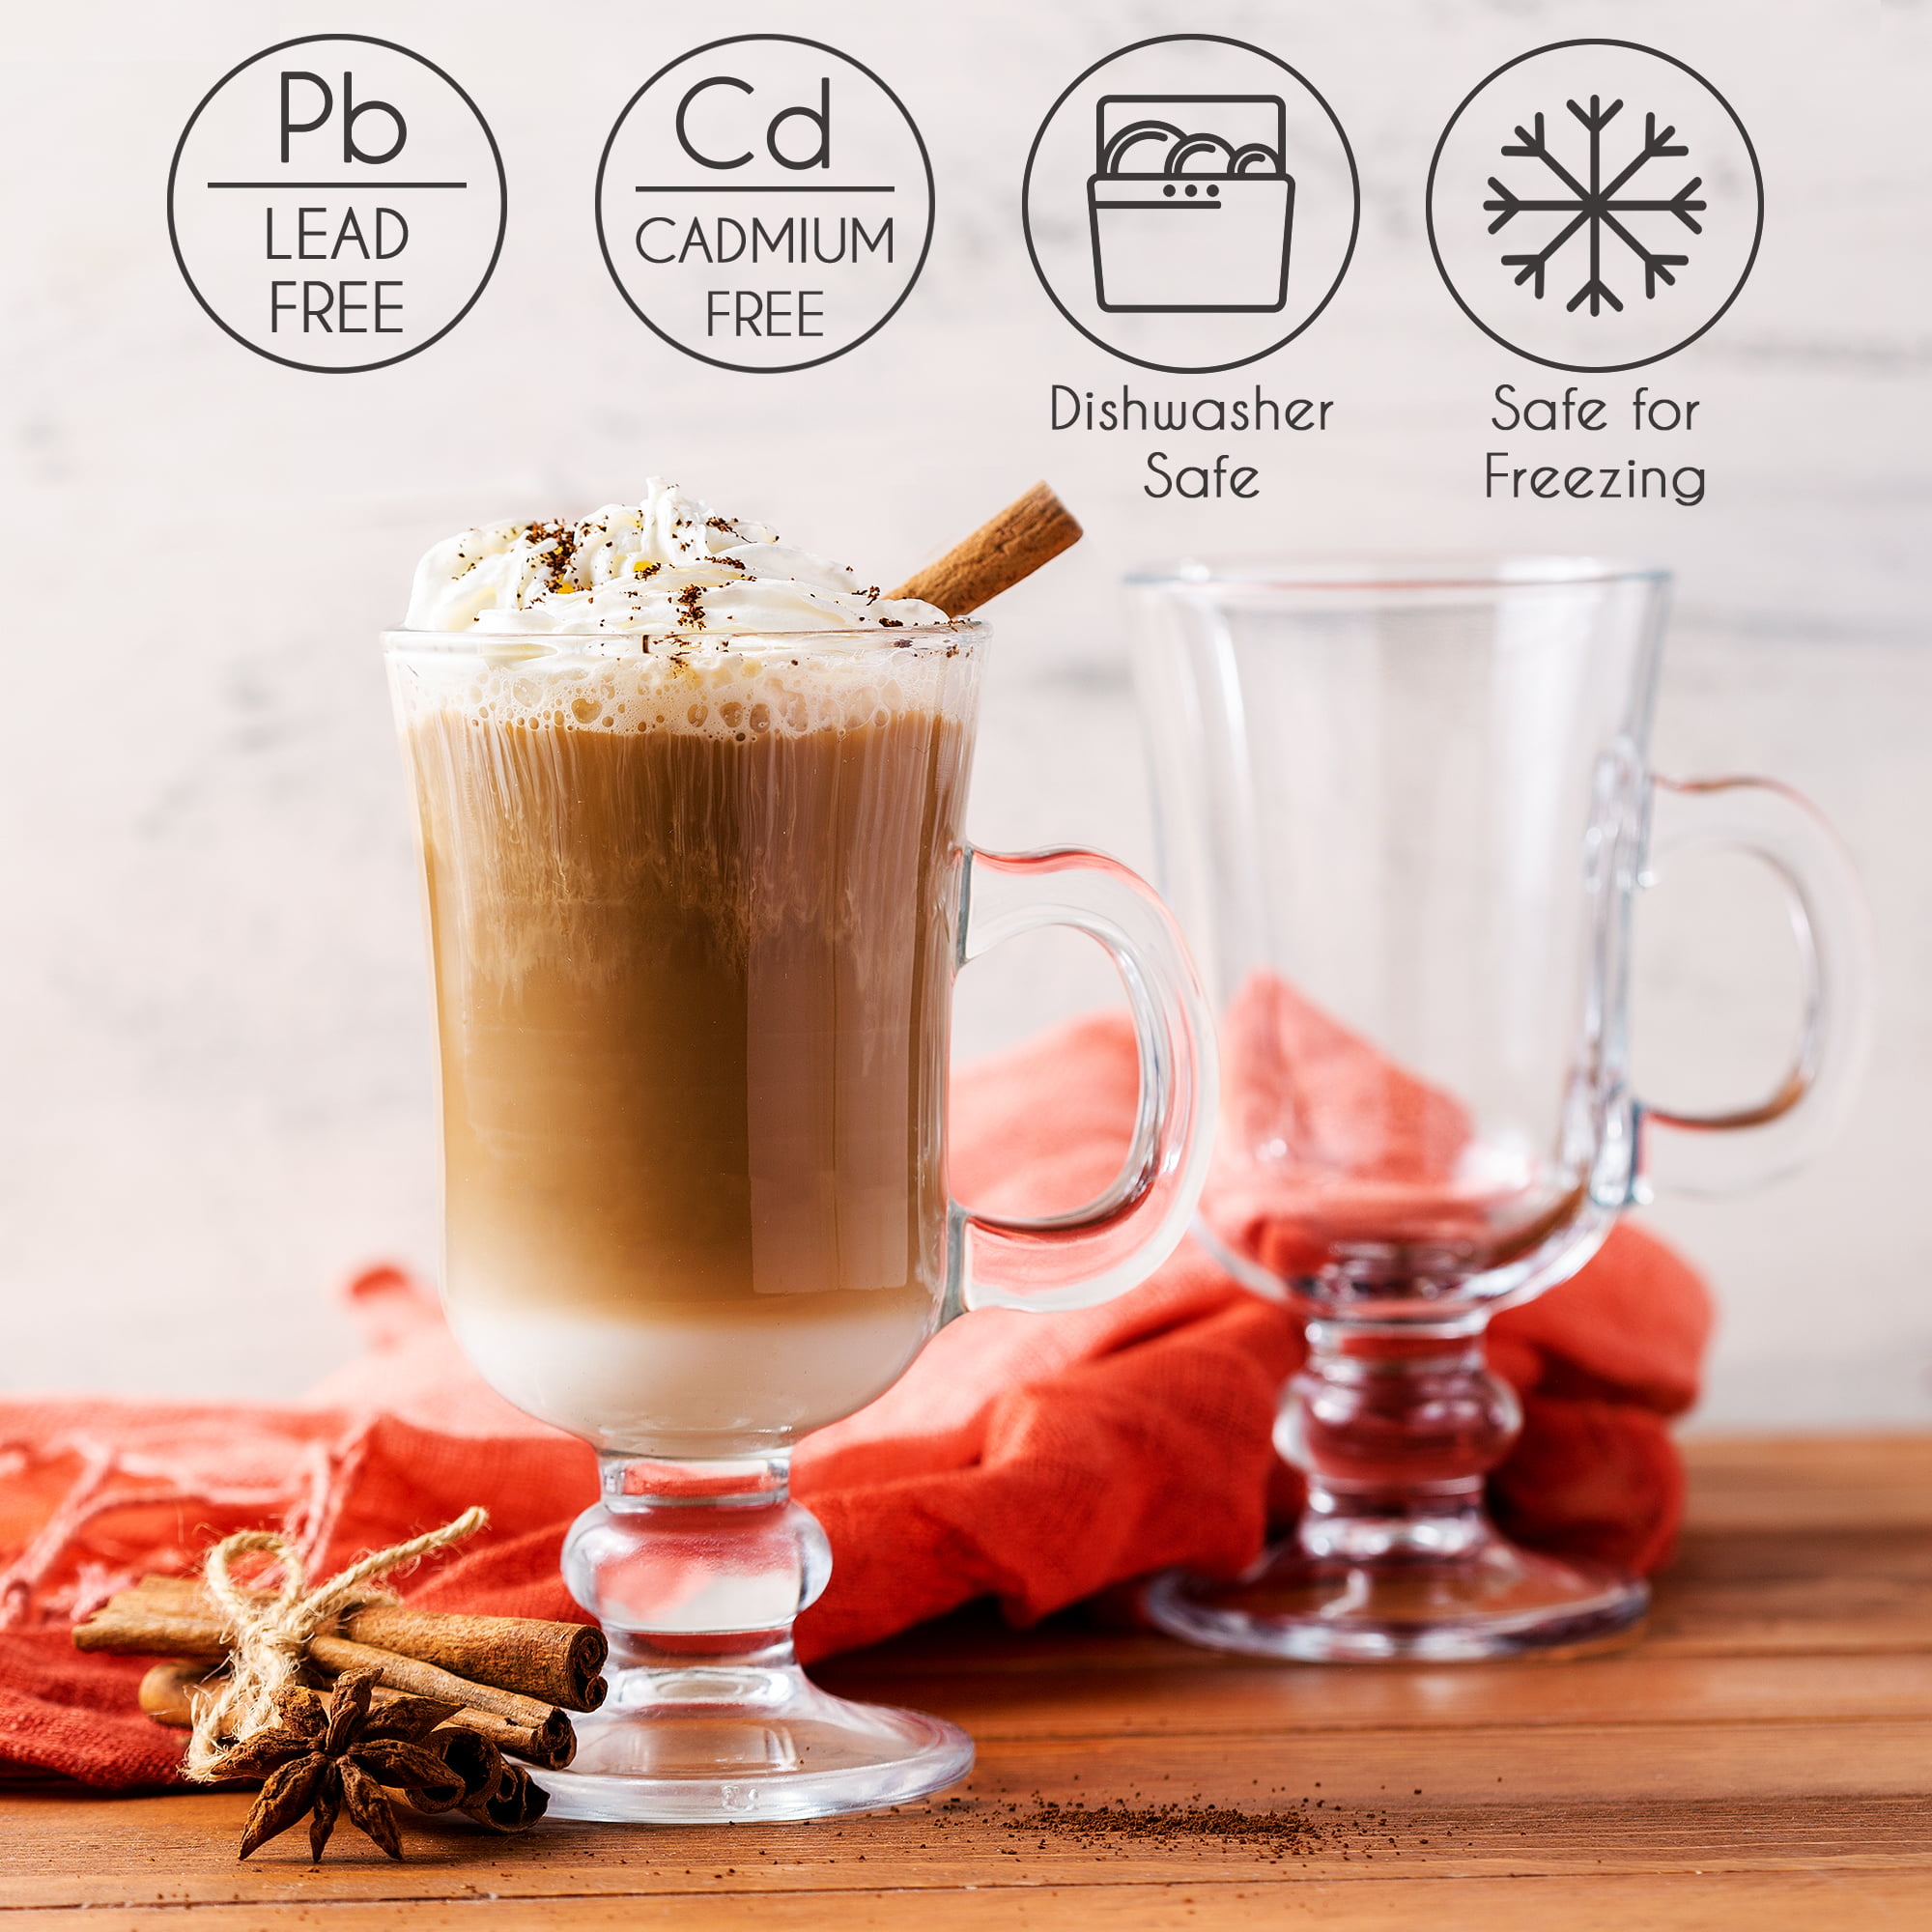 Irish Coffee Mug Tall glass, Latte Cups, Cappuccino and Hot Chocolate Mugs  with Handle, Clear Glass,…See more Irish Coffee Mug Tall glass, Latte Cups